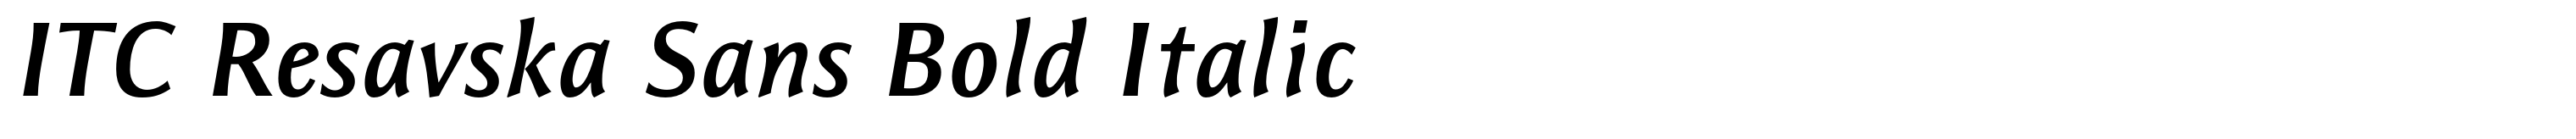 ITC Resavska Sans Bold Italic